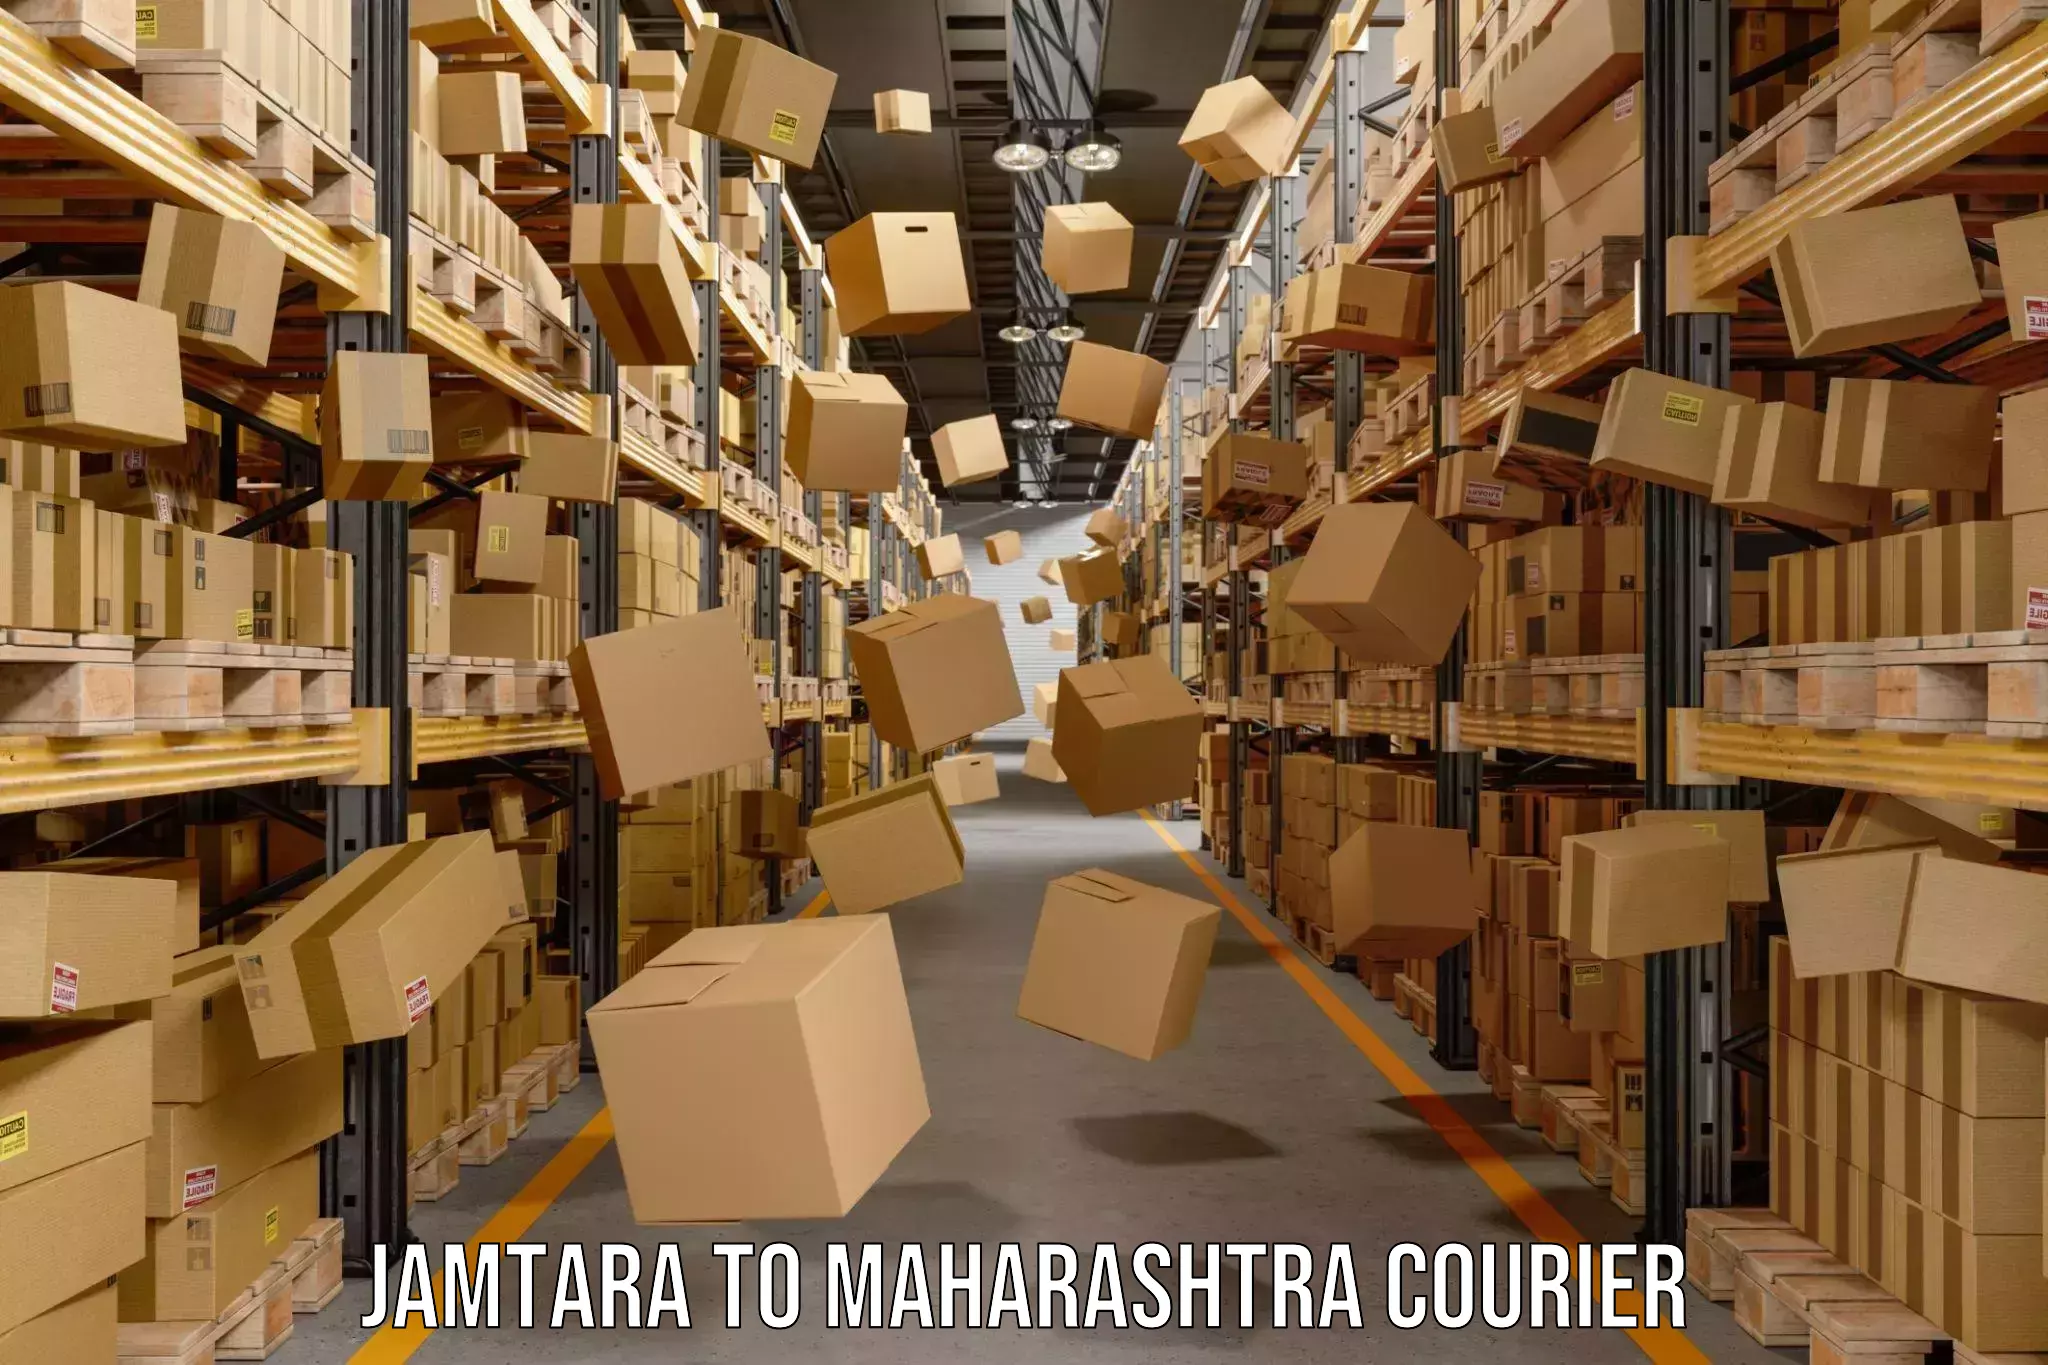 User-friendly courier app Jamtara to Kudus